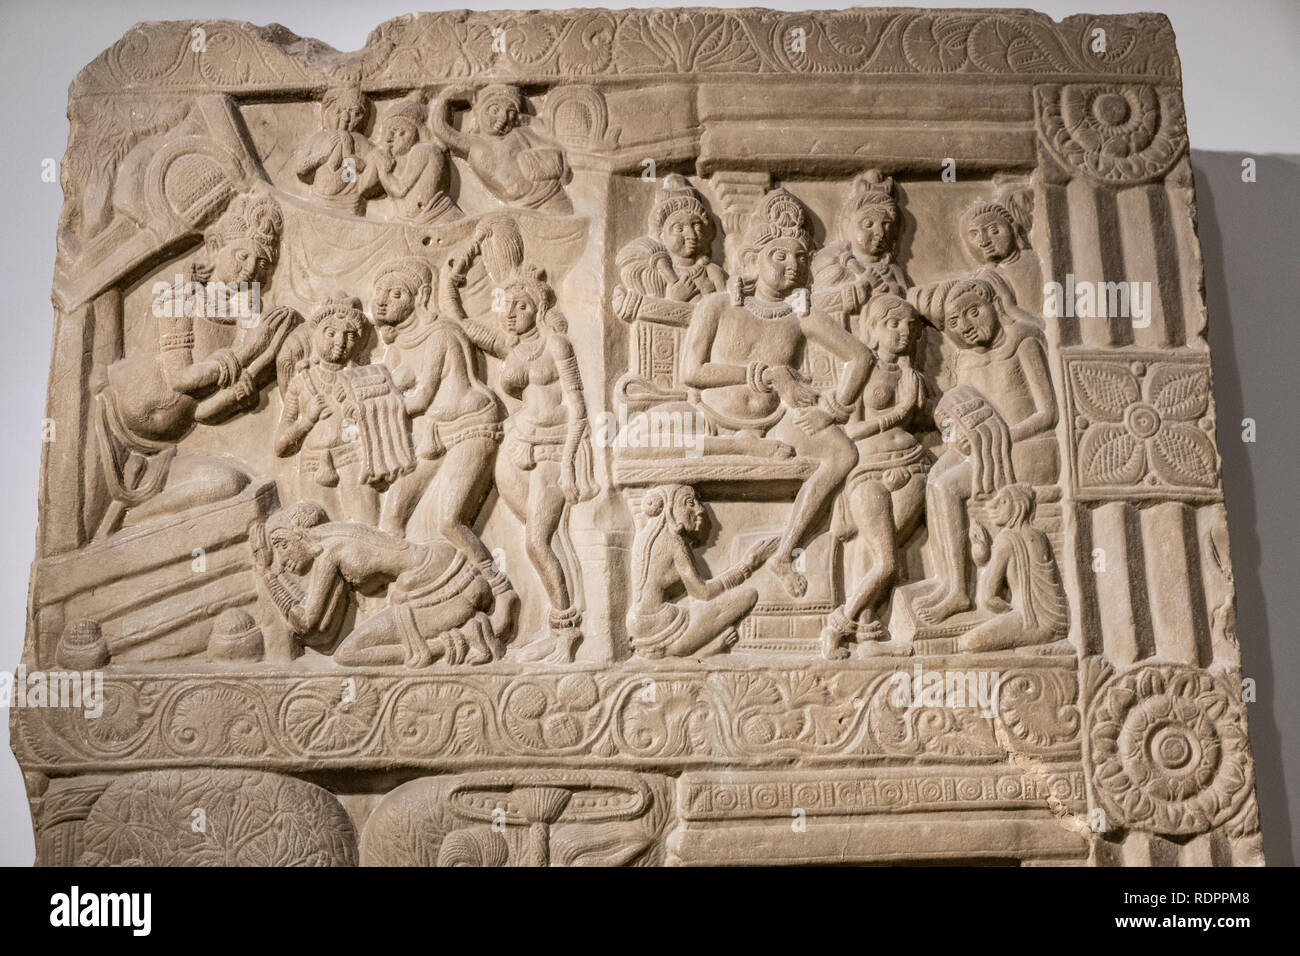 Leben Szenen aus dem Leben des Buddha. Ikshvaku. 3. Jahrhundert n. Nagarjunakonda, Andhra Pradesh. Kalkstein. 176 x 89 x 17 cm. Stockfoto